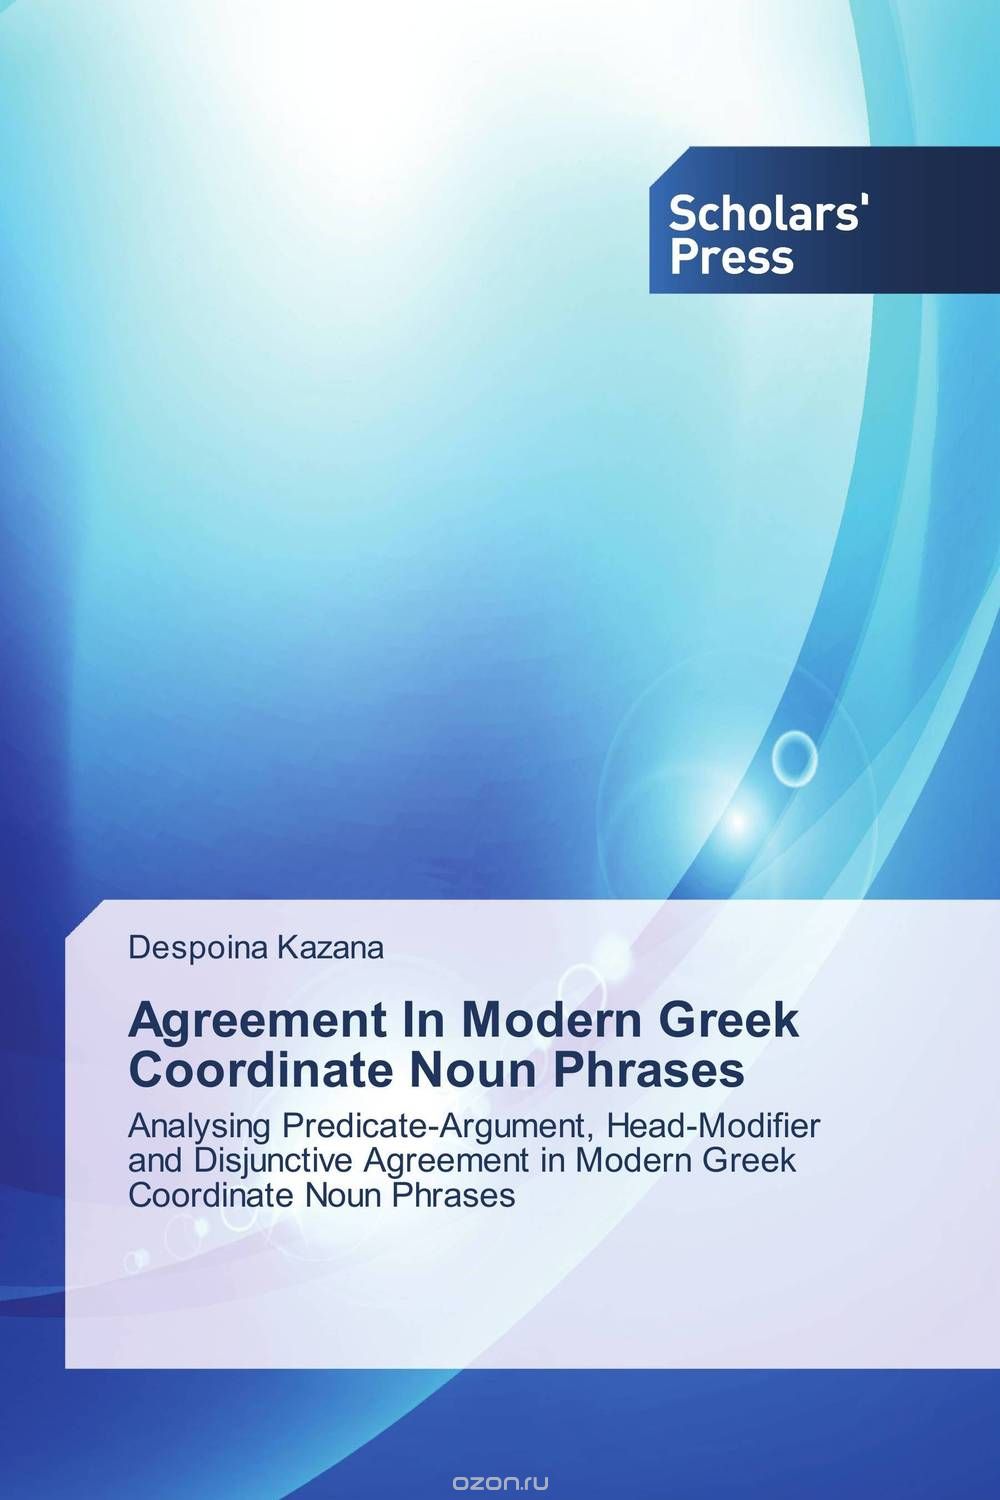 Скачать книгу "Agreement In Modern Greek Coordinate Noun Phrases"